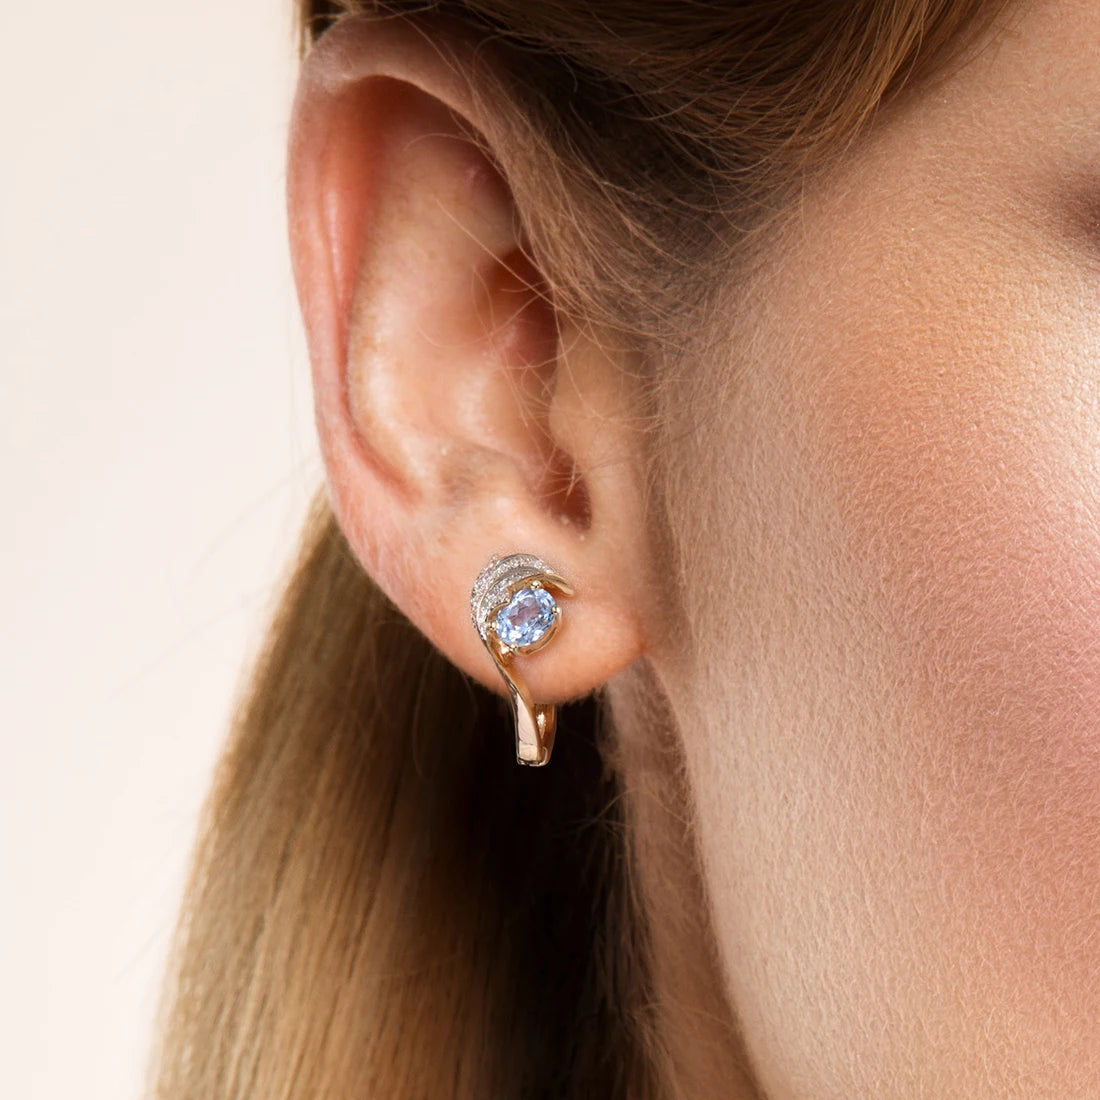 VISTOSO Gold Earrings For Women 14K 585 Rose Gold Glamorous Shiny Sky Blue Topaz Sparkling Diamond Luxury Trendy Fine Jewelry